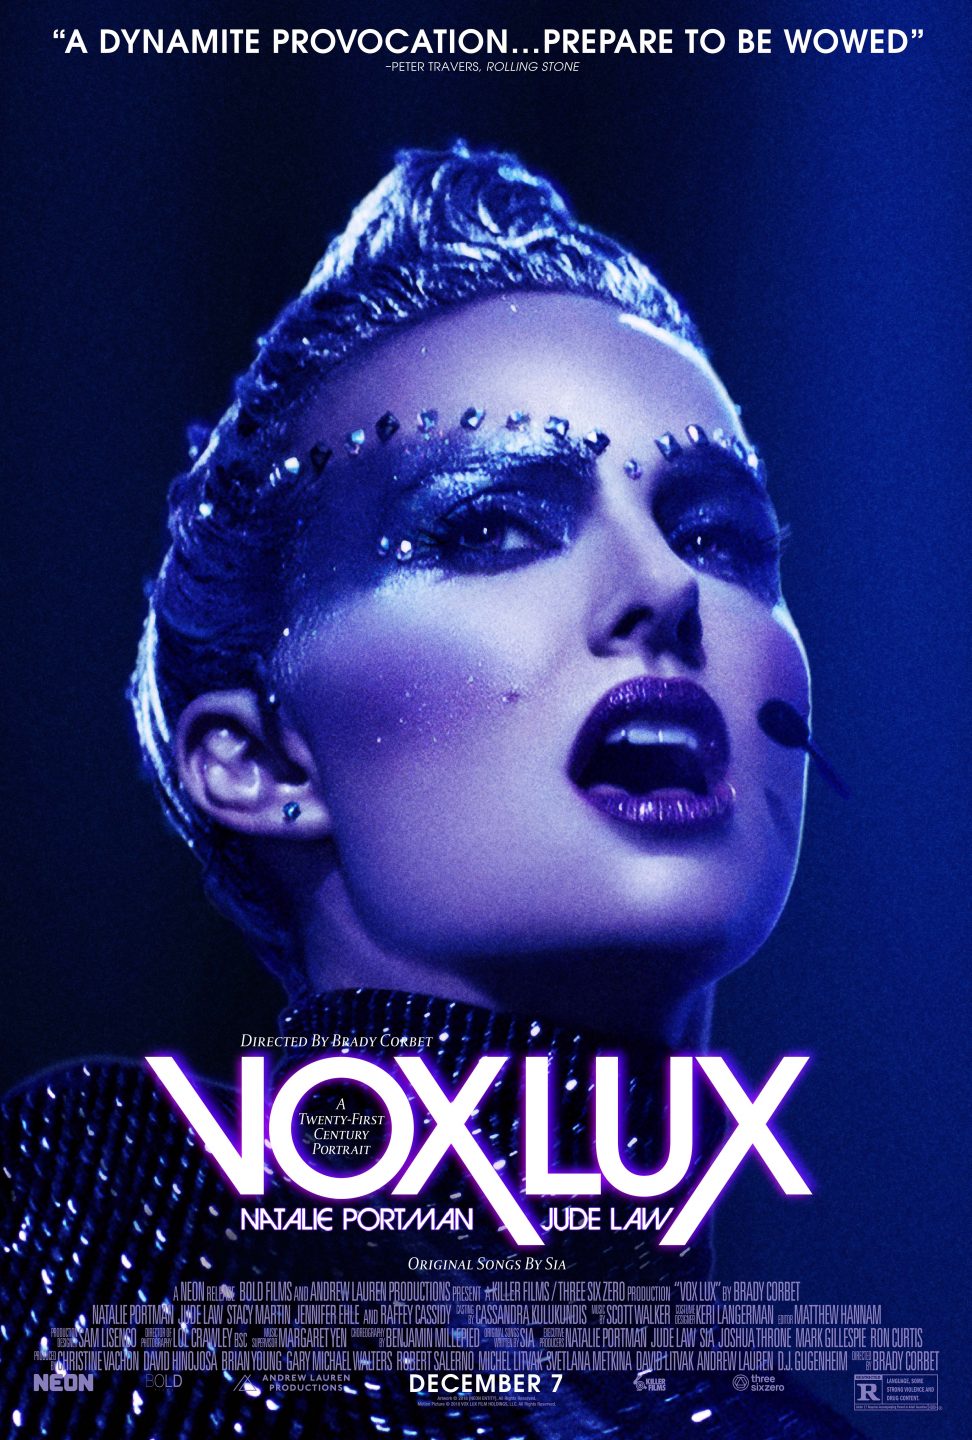 Vox Lux poster (NEON)